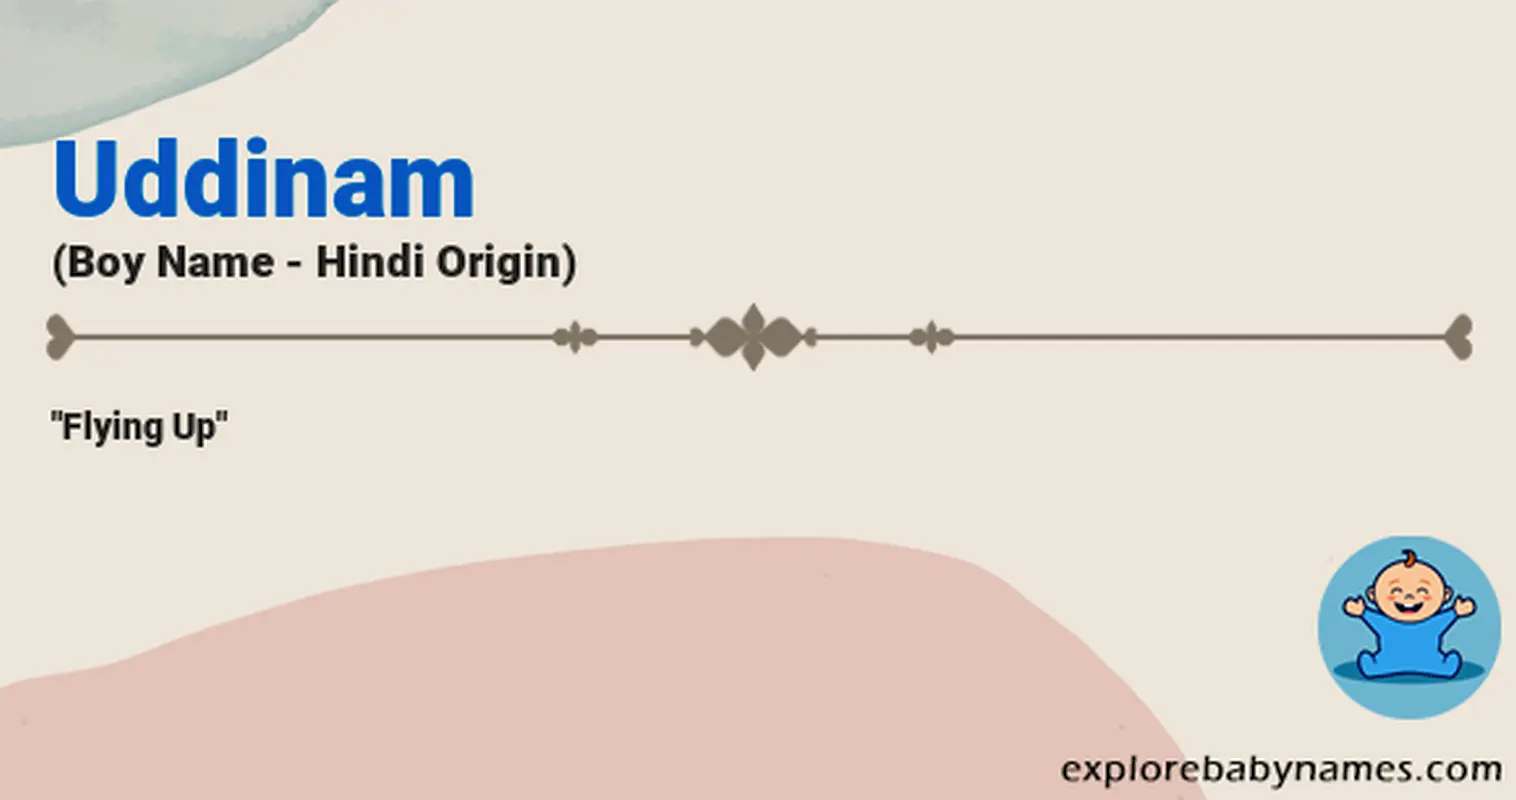 Meaning of Uddinam